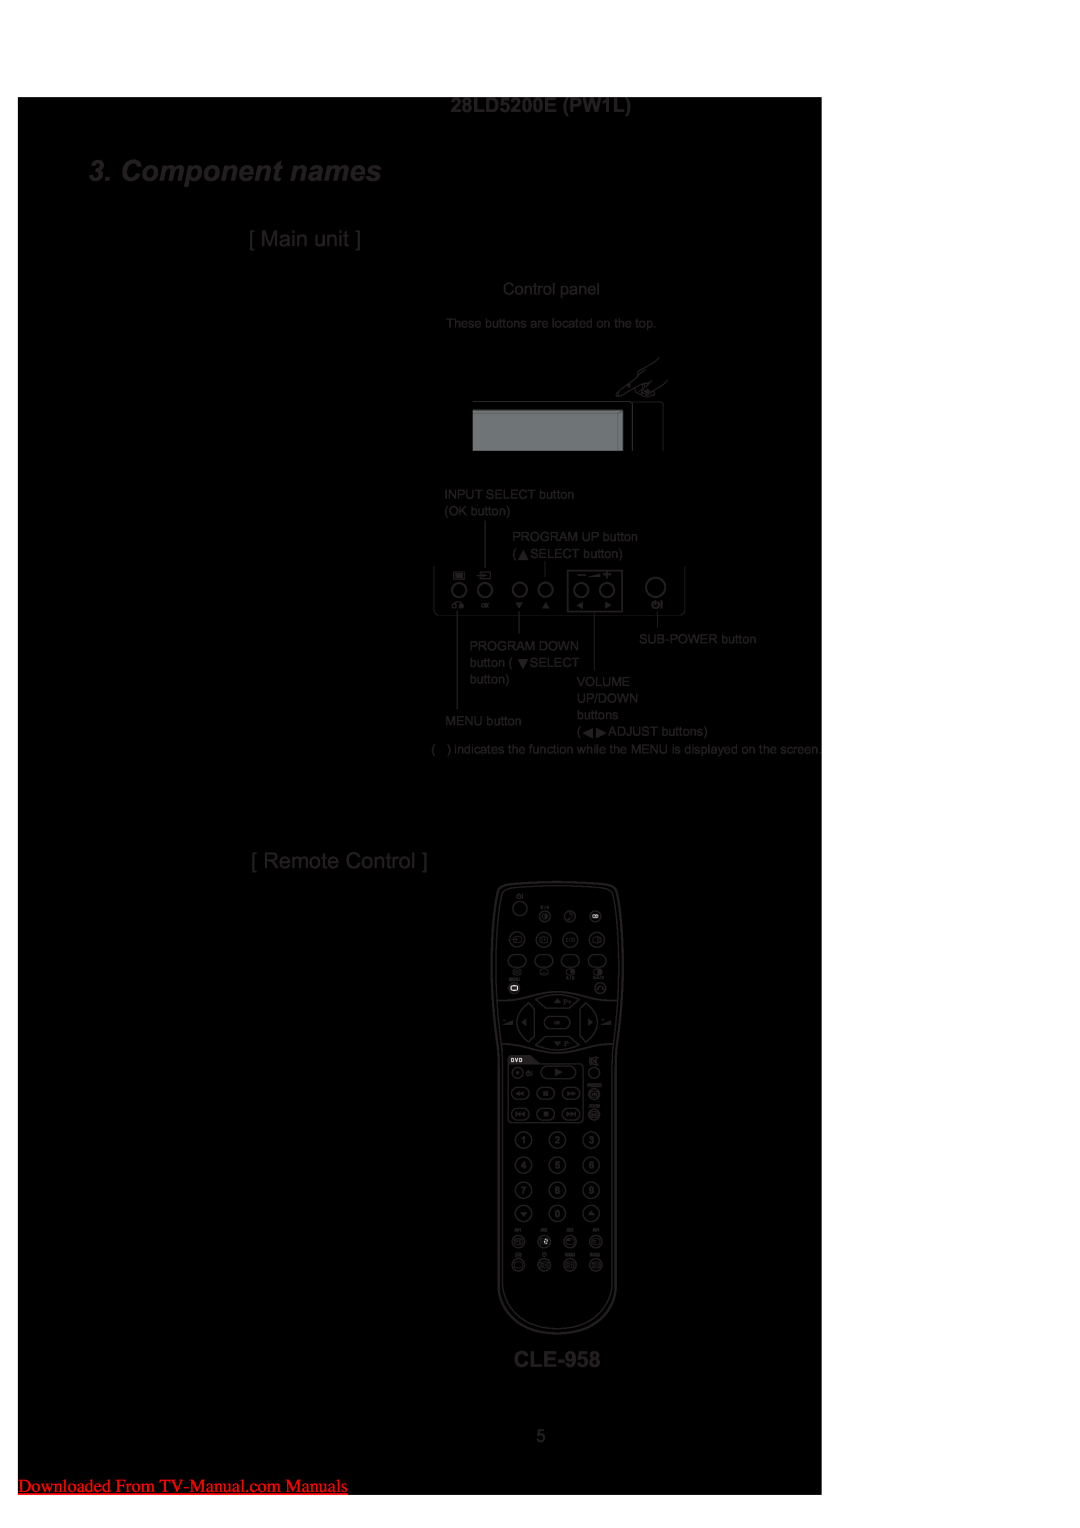 Hitachi Component names, Main unit, Remote Control, CLE-958, 28LD5200E PW1L, Downloaded From TV-Manual.com Manuals 